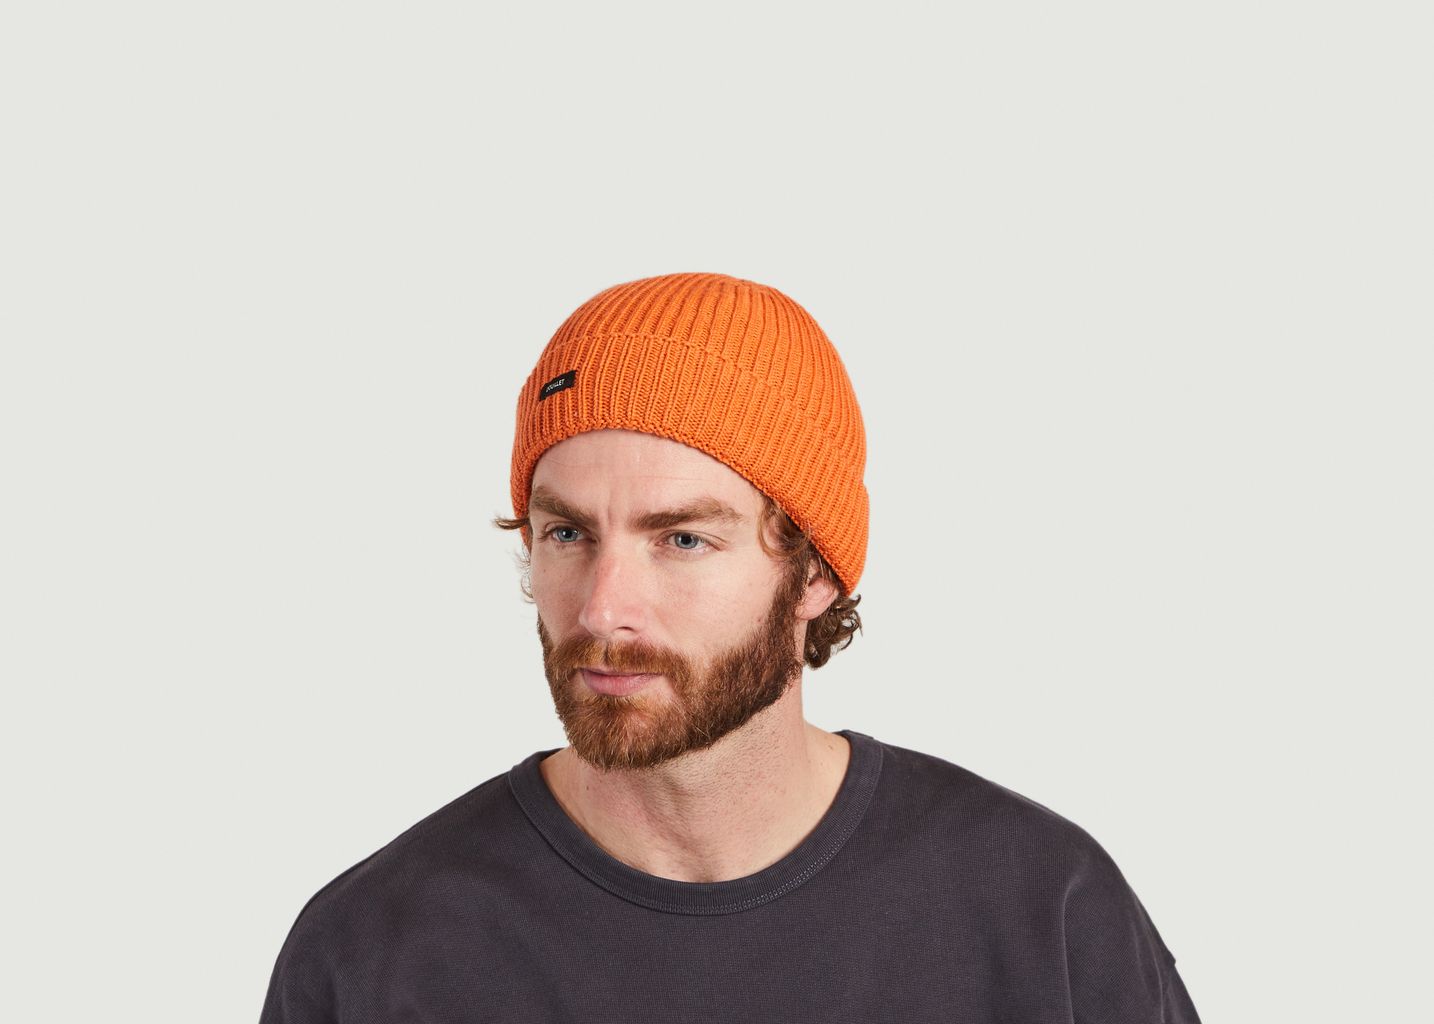 Orangefarbene Mütze - Douillet